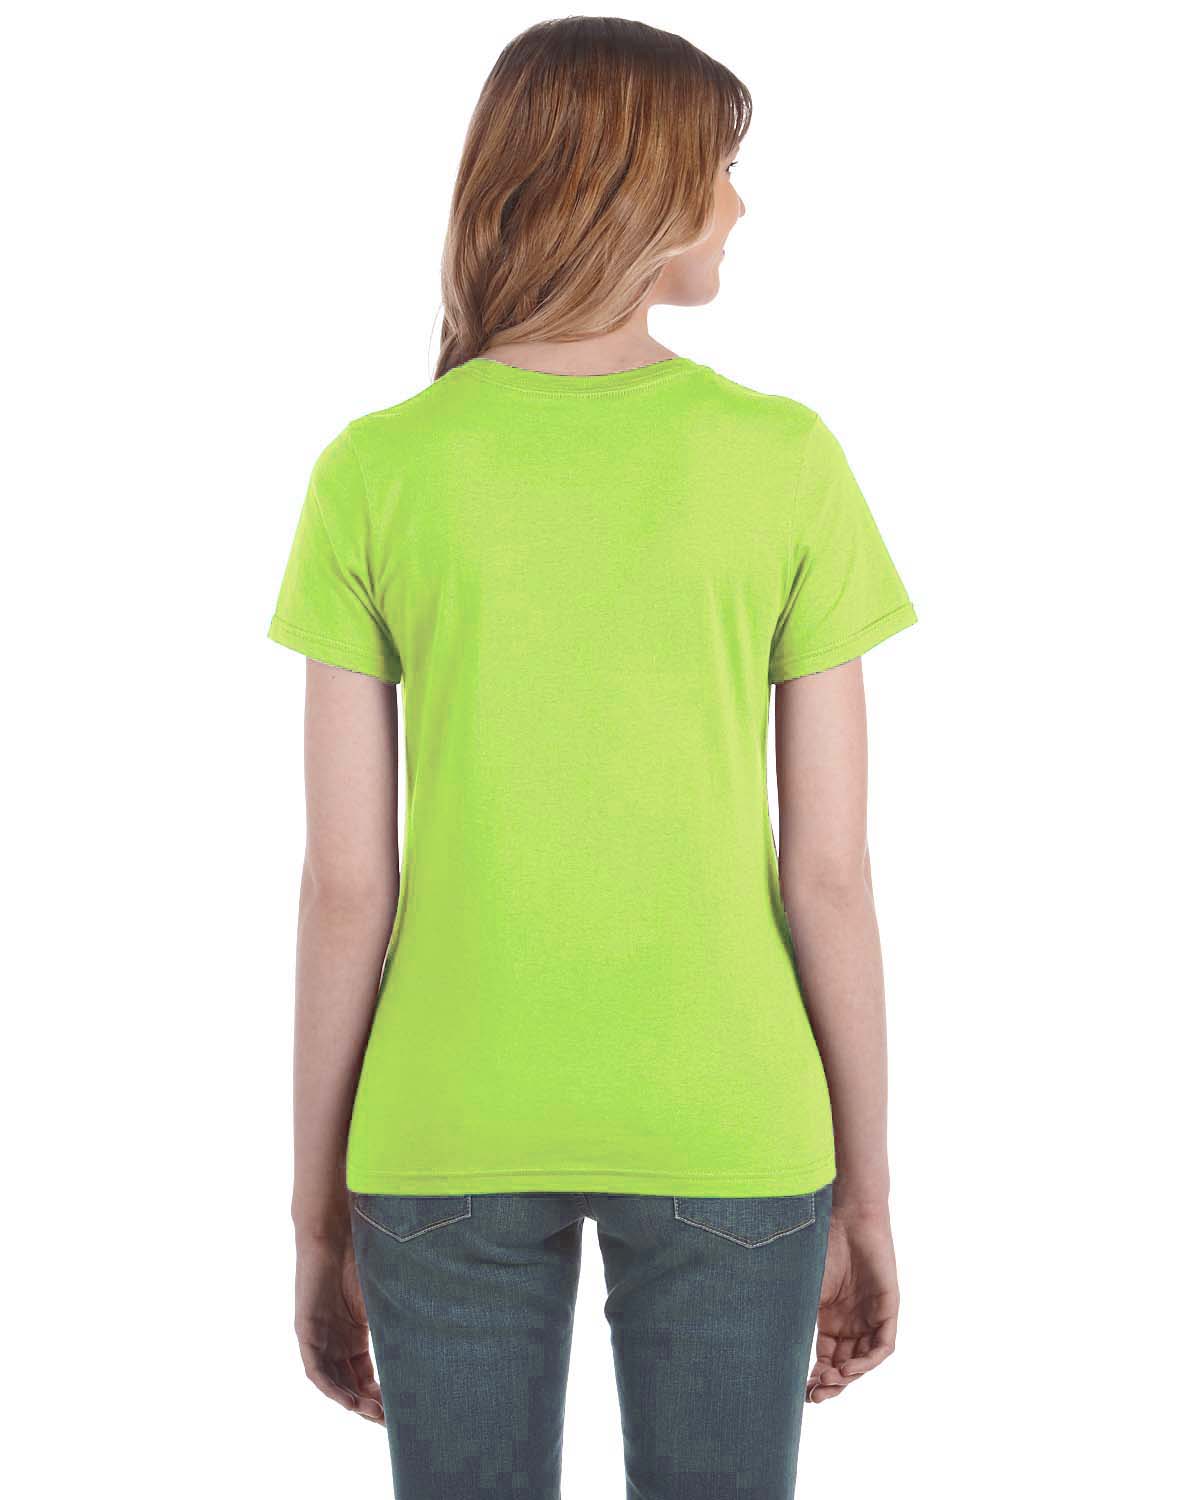 NEW Anvil Women's 100% Ringspun Cotton Fashion Fit T-Shirt ...